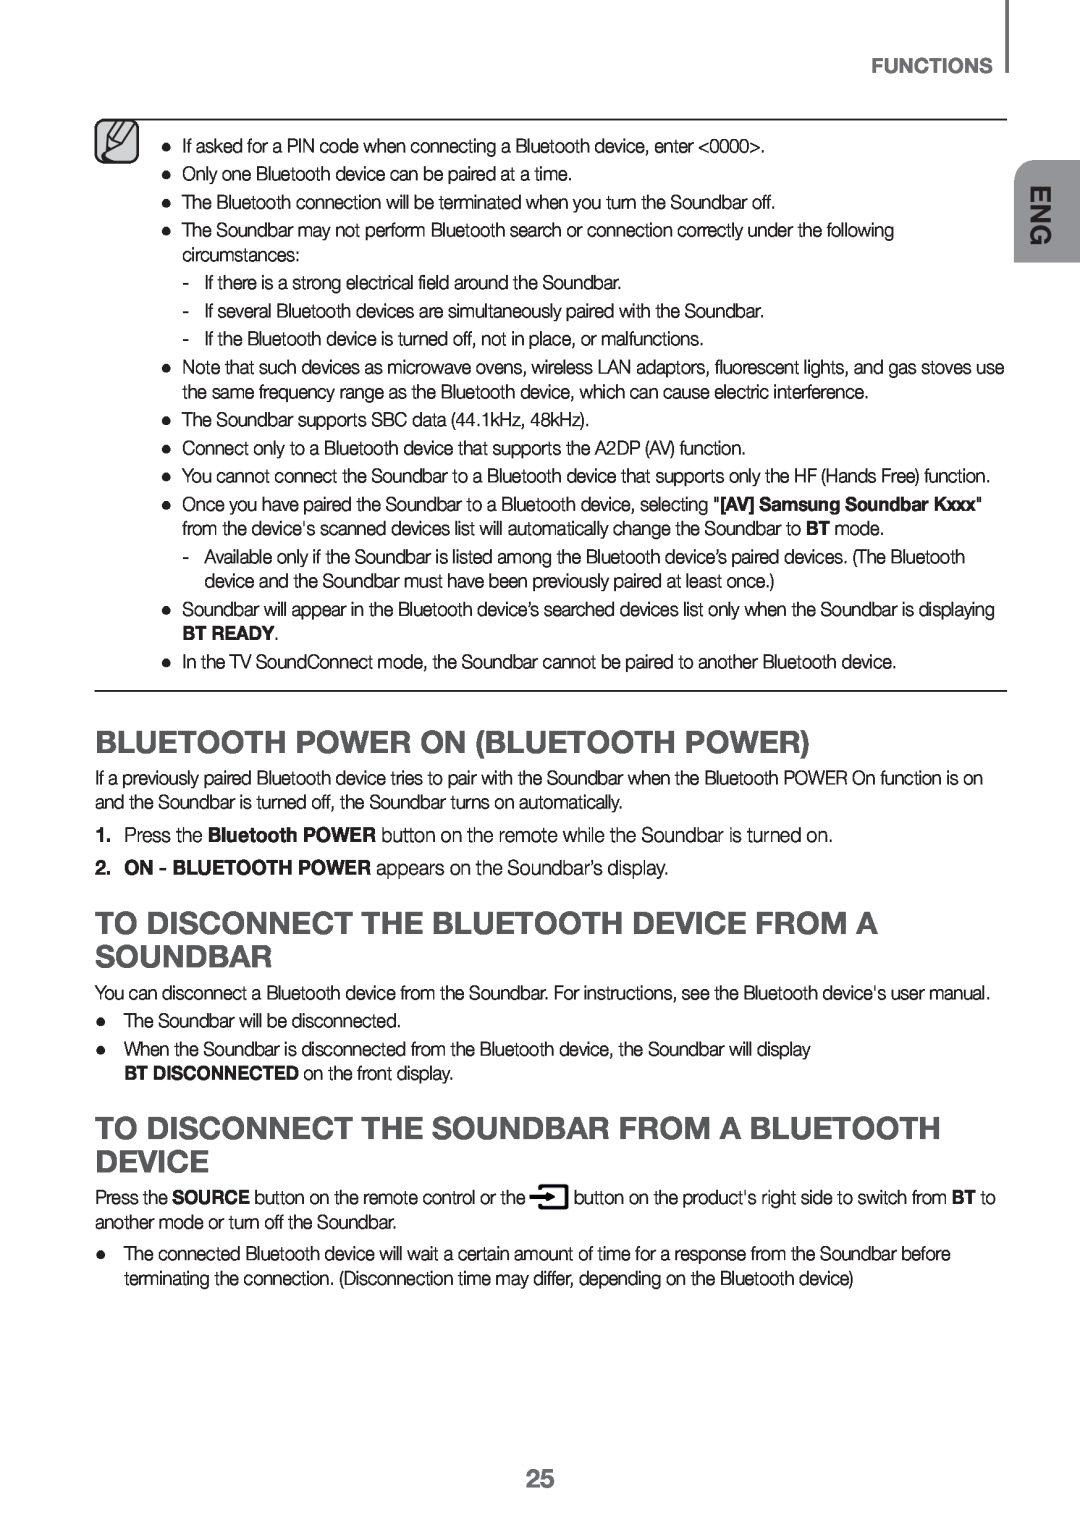 Samsung HW-K650/EN manual Bluetooth POWER On Bluetooth POWER, To disconnect the Bluetooth device from A Soundbar, Functions 